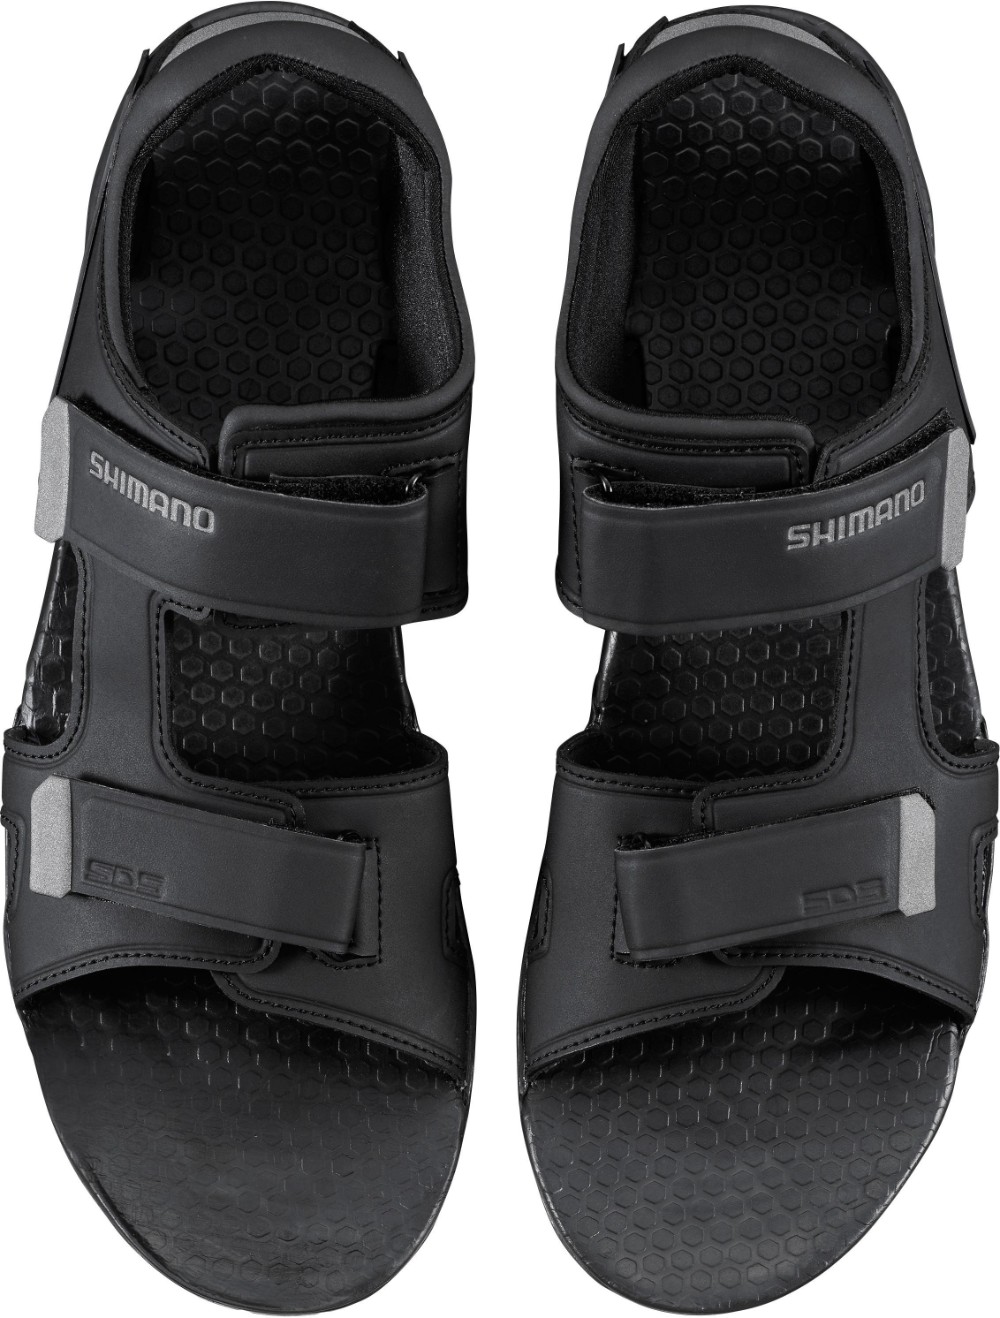 SD5 (SD501) SPD MTB Sandals image 1